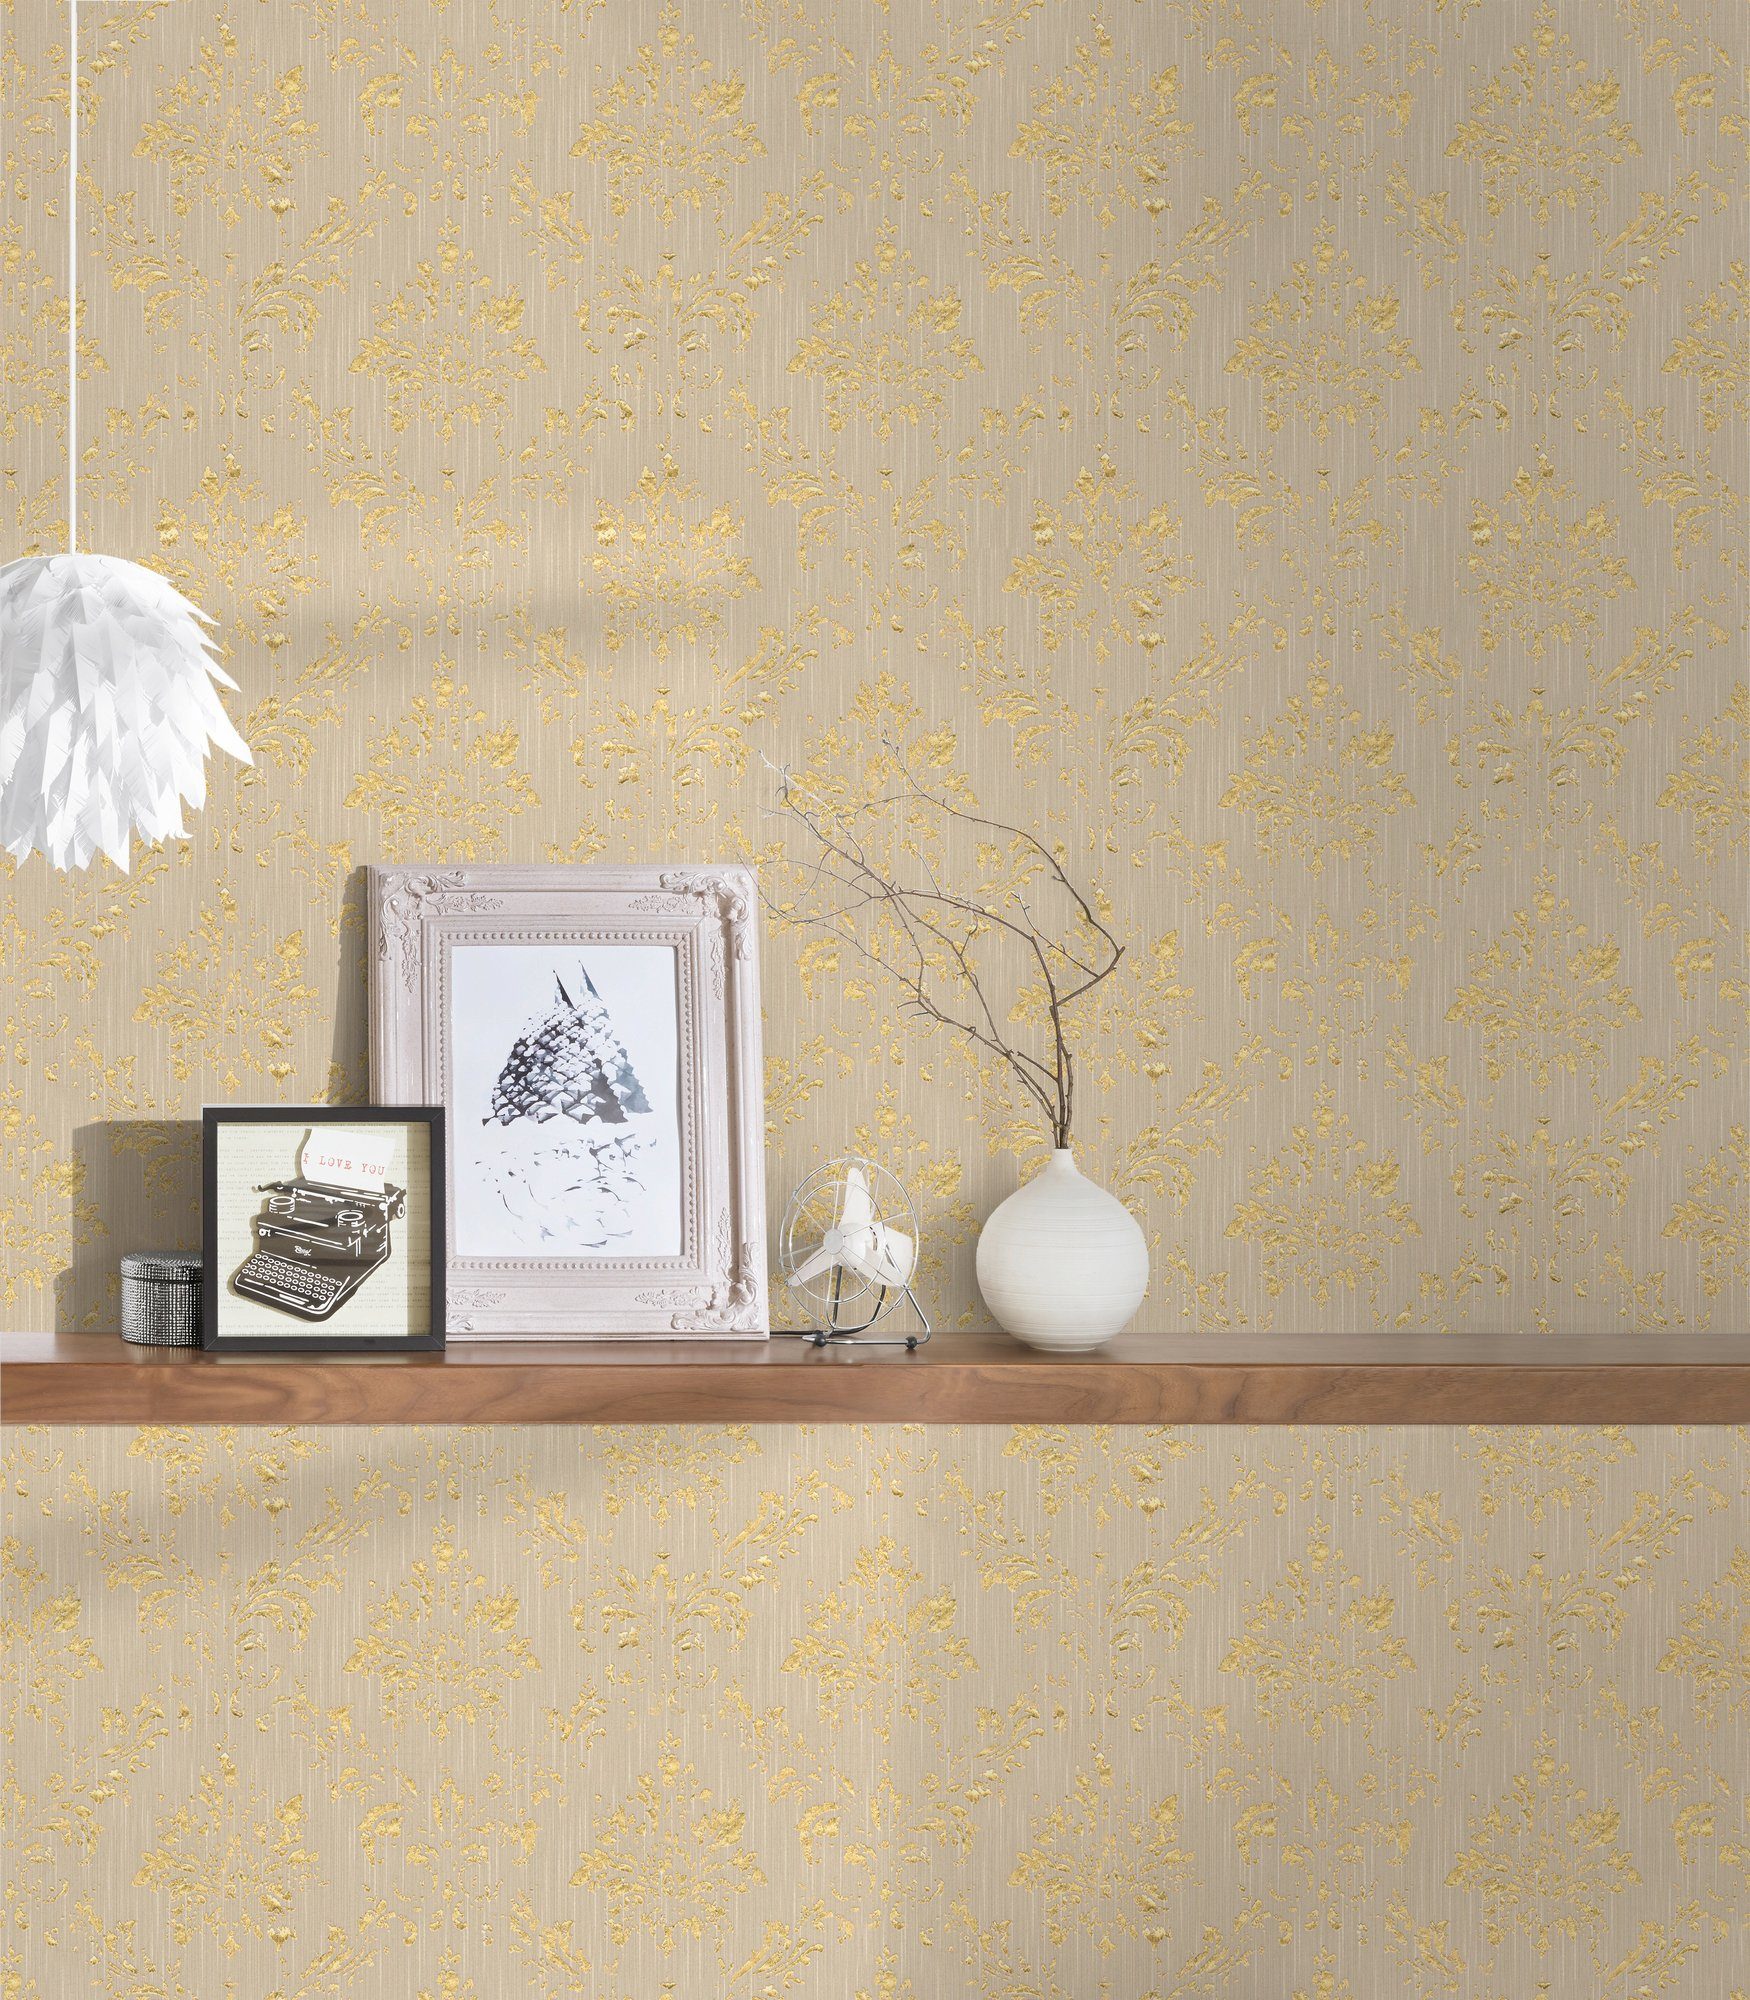 Architects matt, samtig, beige/gold Metallic Paper Textiltapete glänzend, Ornament Barock Tapete Barock, Silk,